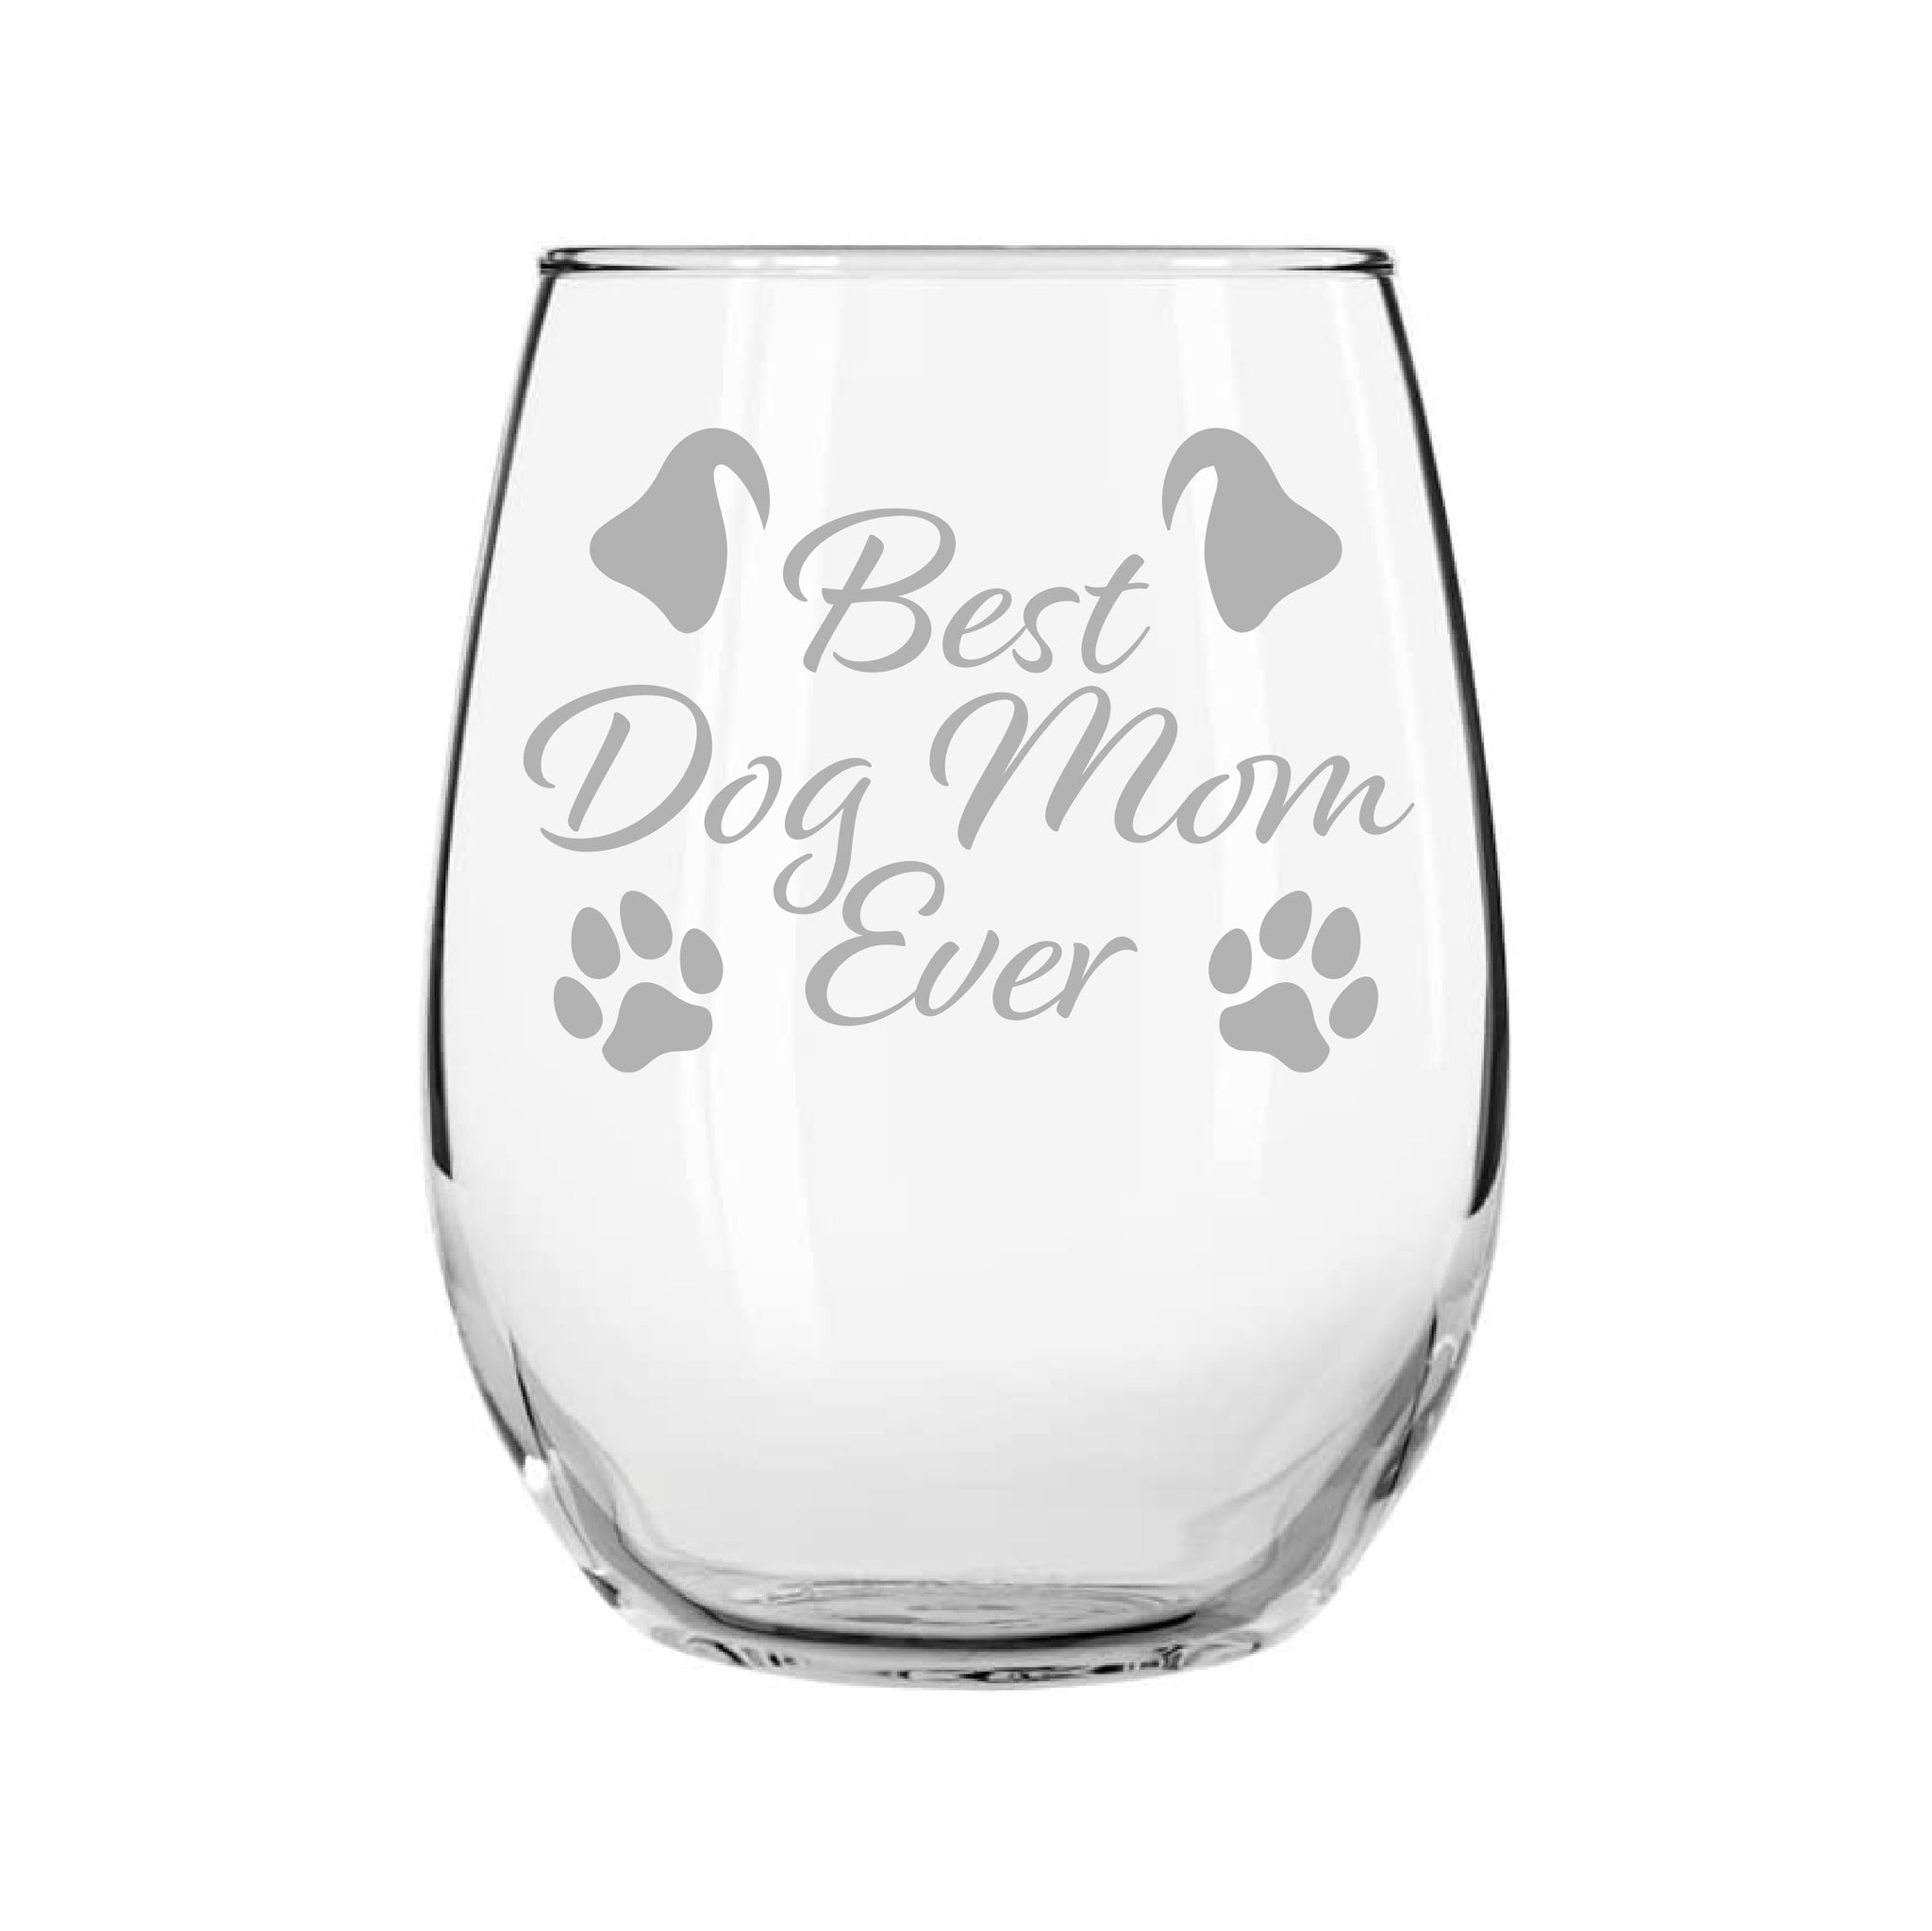 Best Dog Mom Ever Wine Glass - American Made Quality Glassware